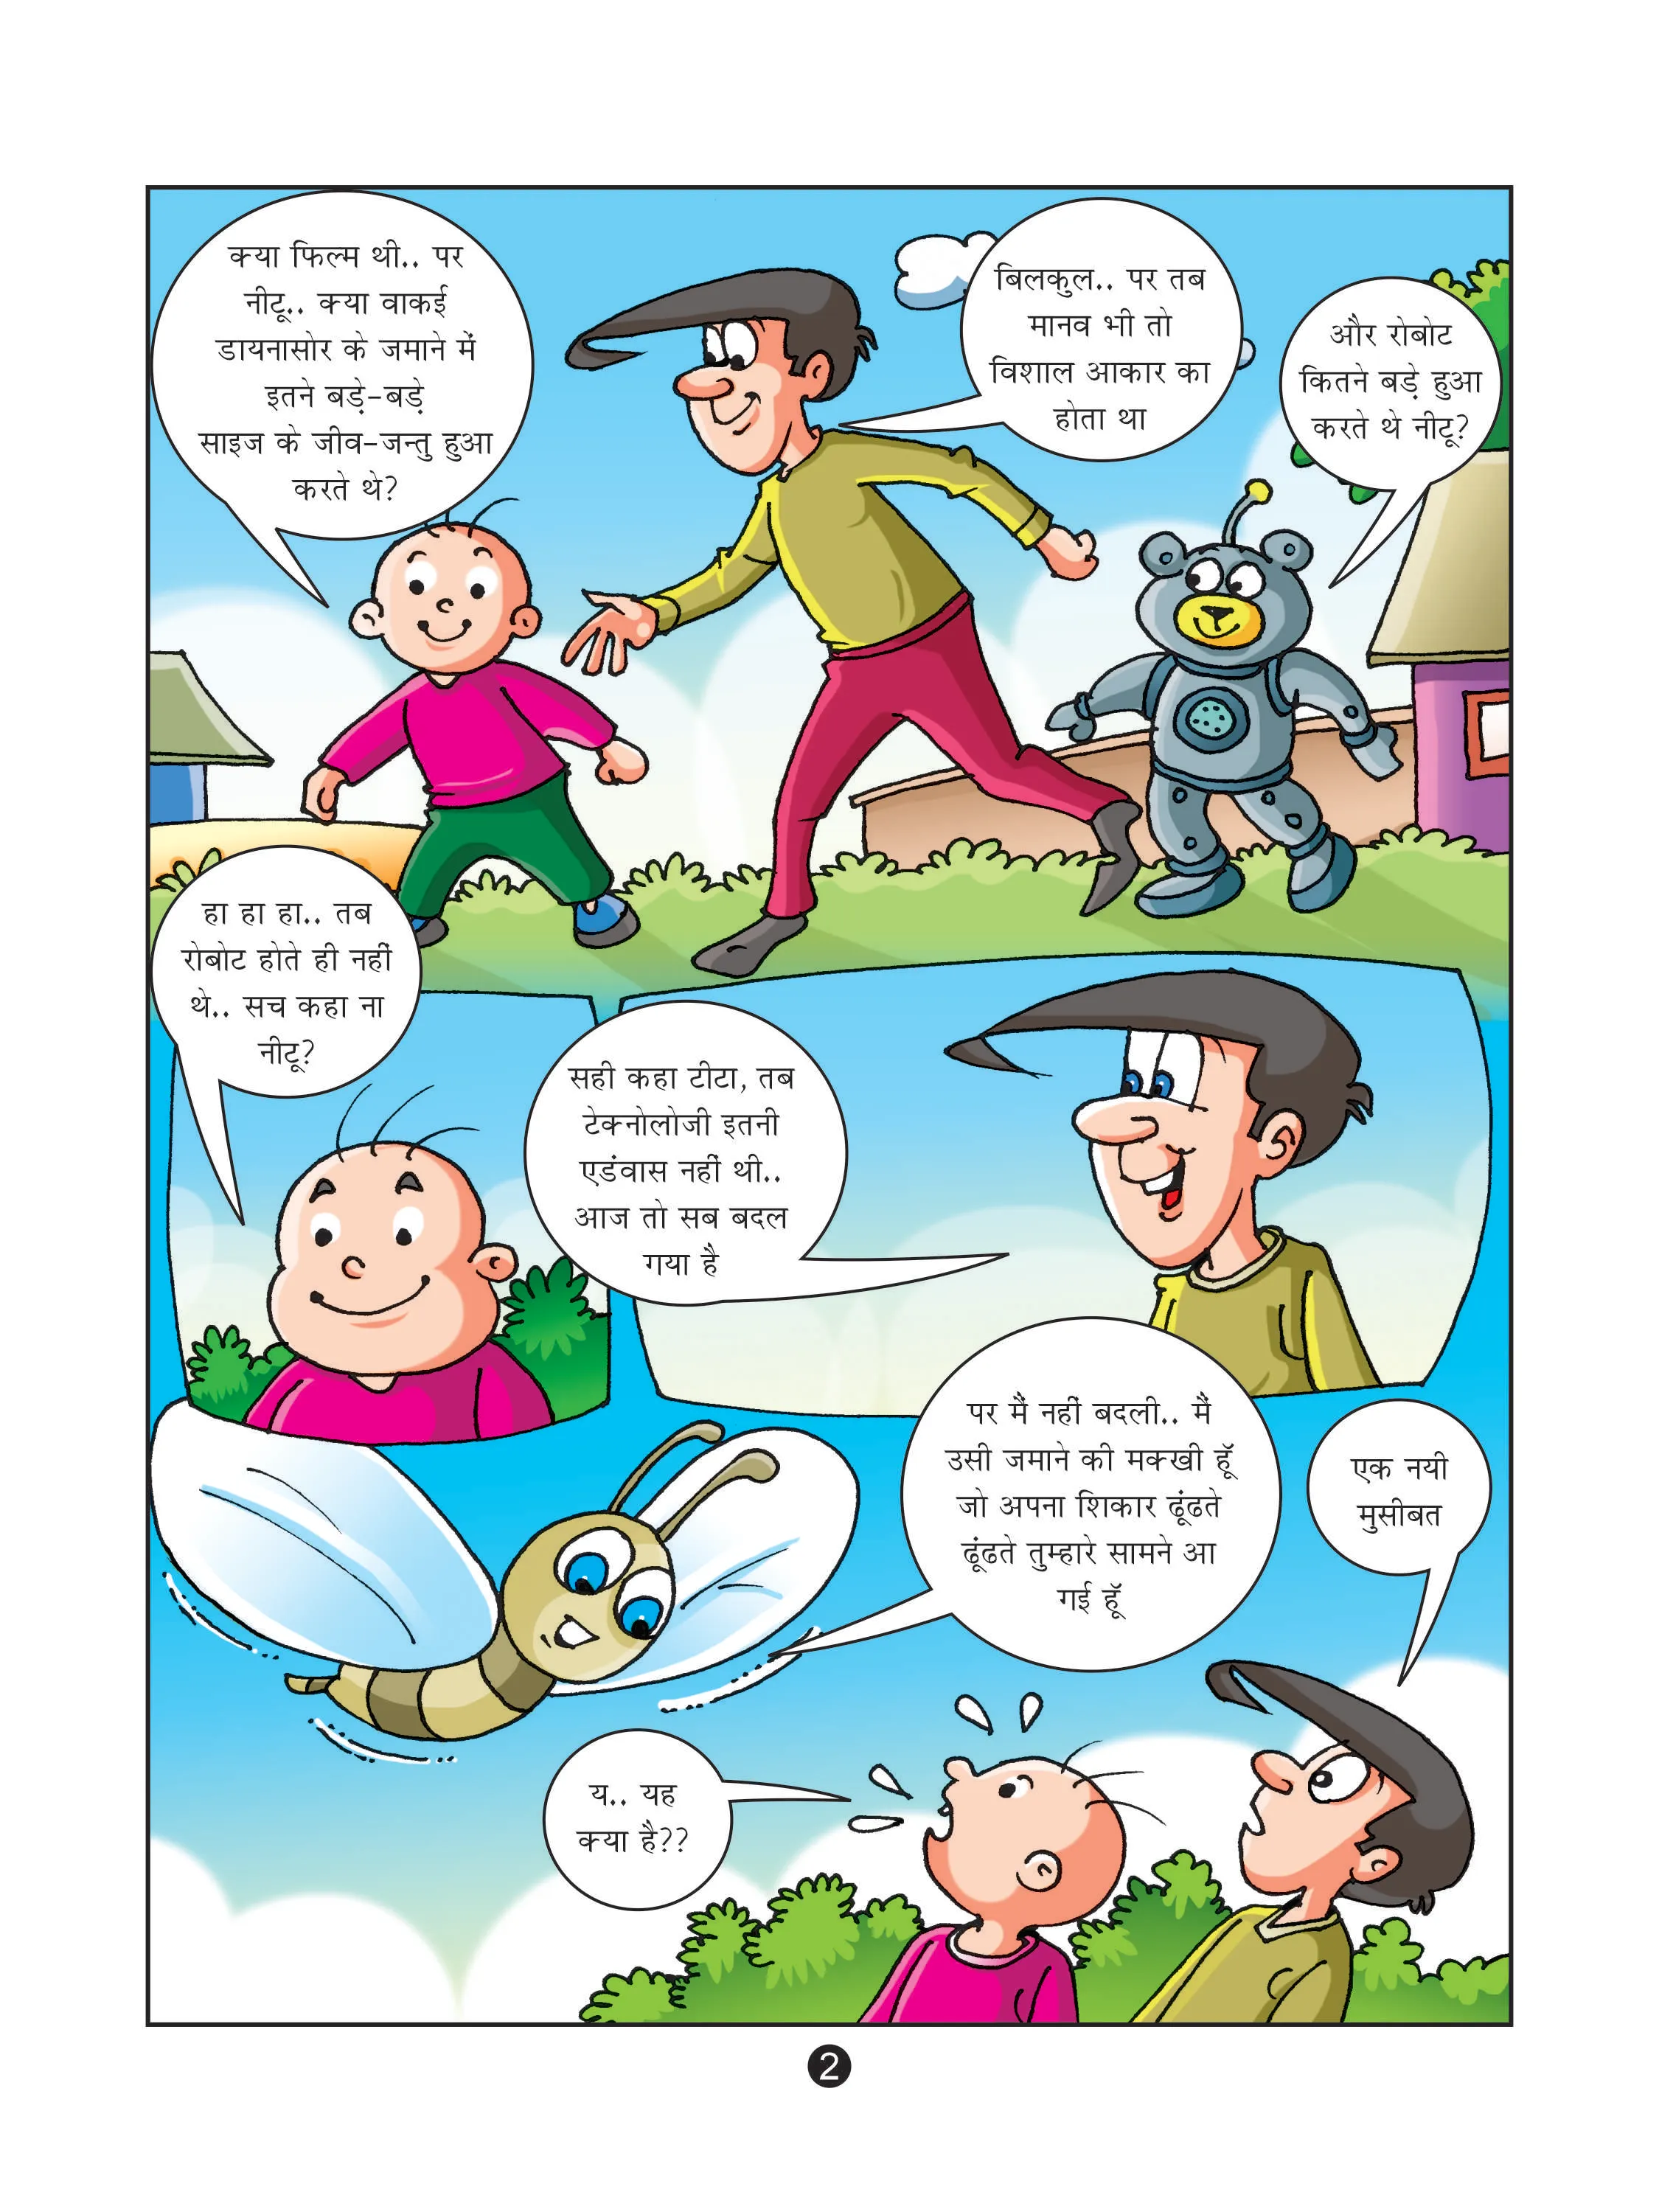 Lotpot E-Comics cartoon character Natkhat Neetu